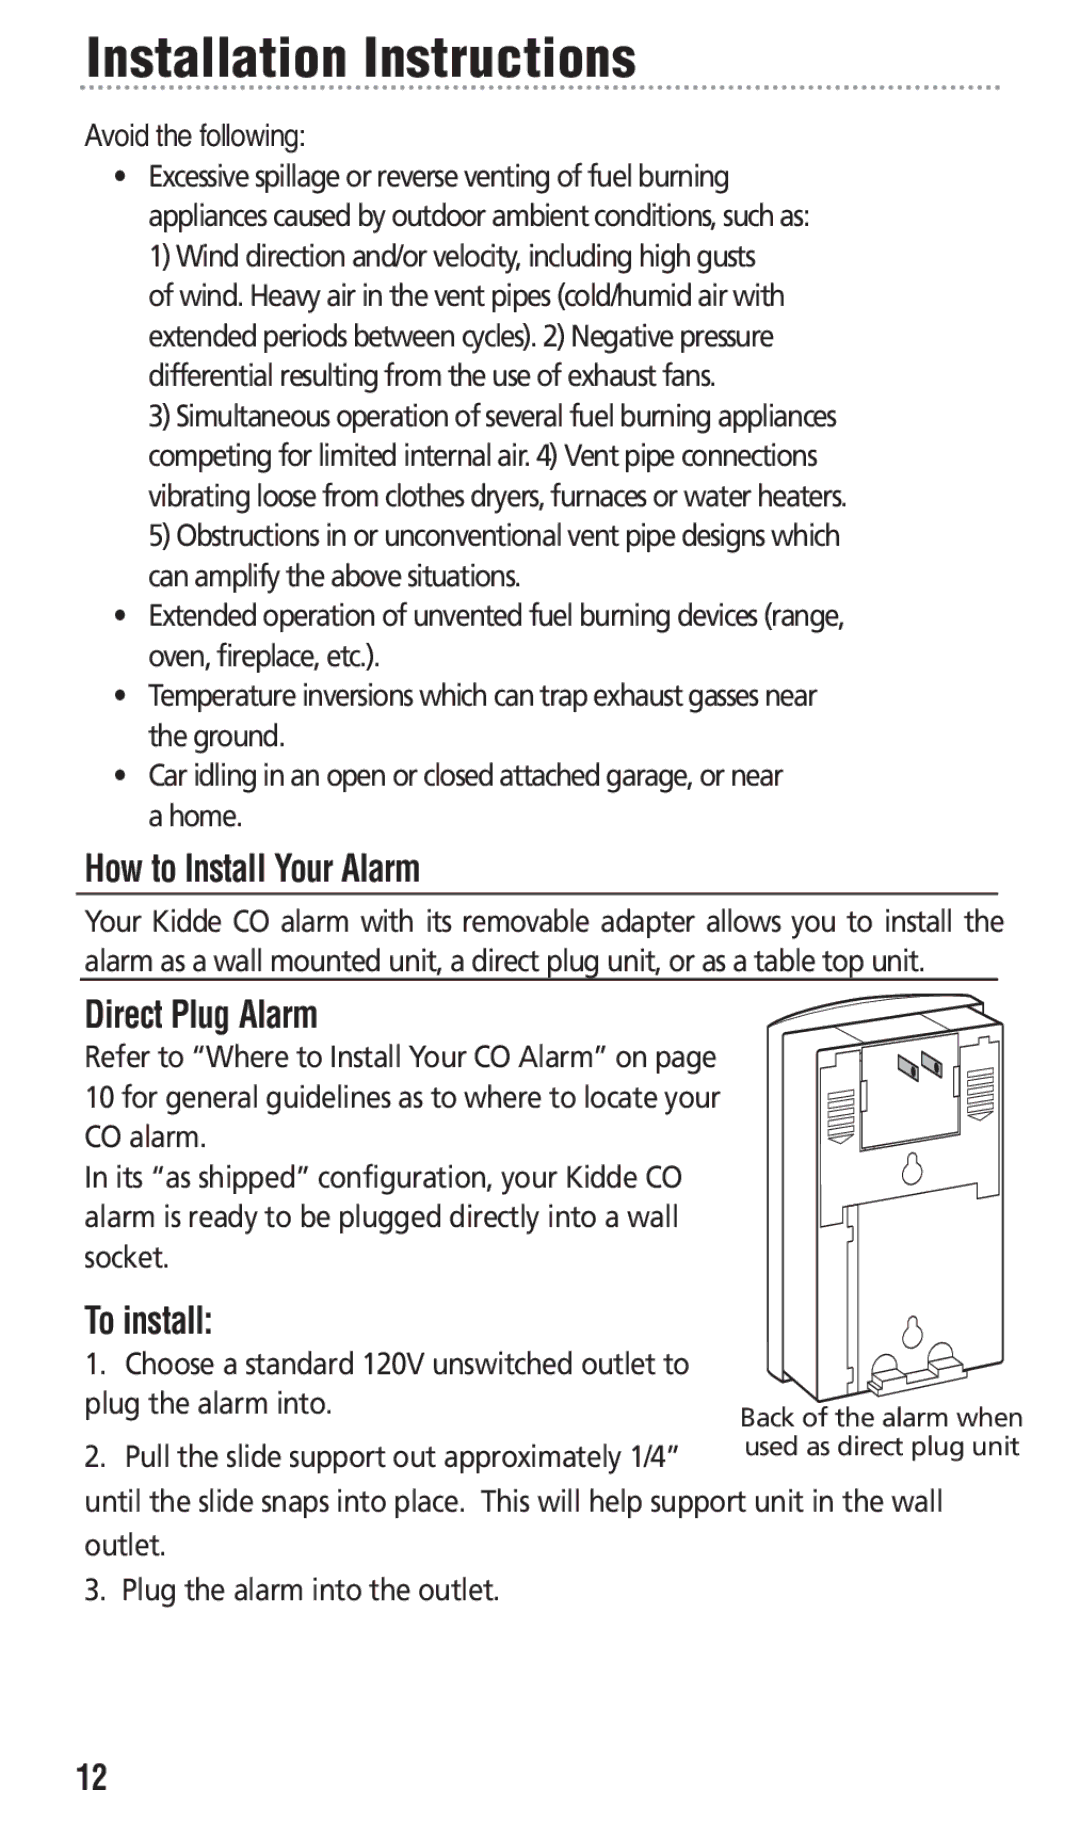 Kidde KN-COPP-3 manual How to Install Your Alarm, Direct Plug Alarm, To install 